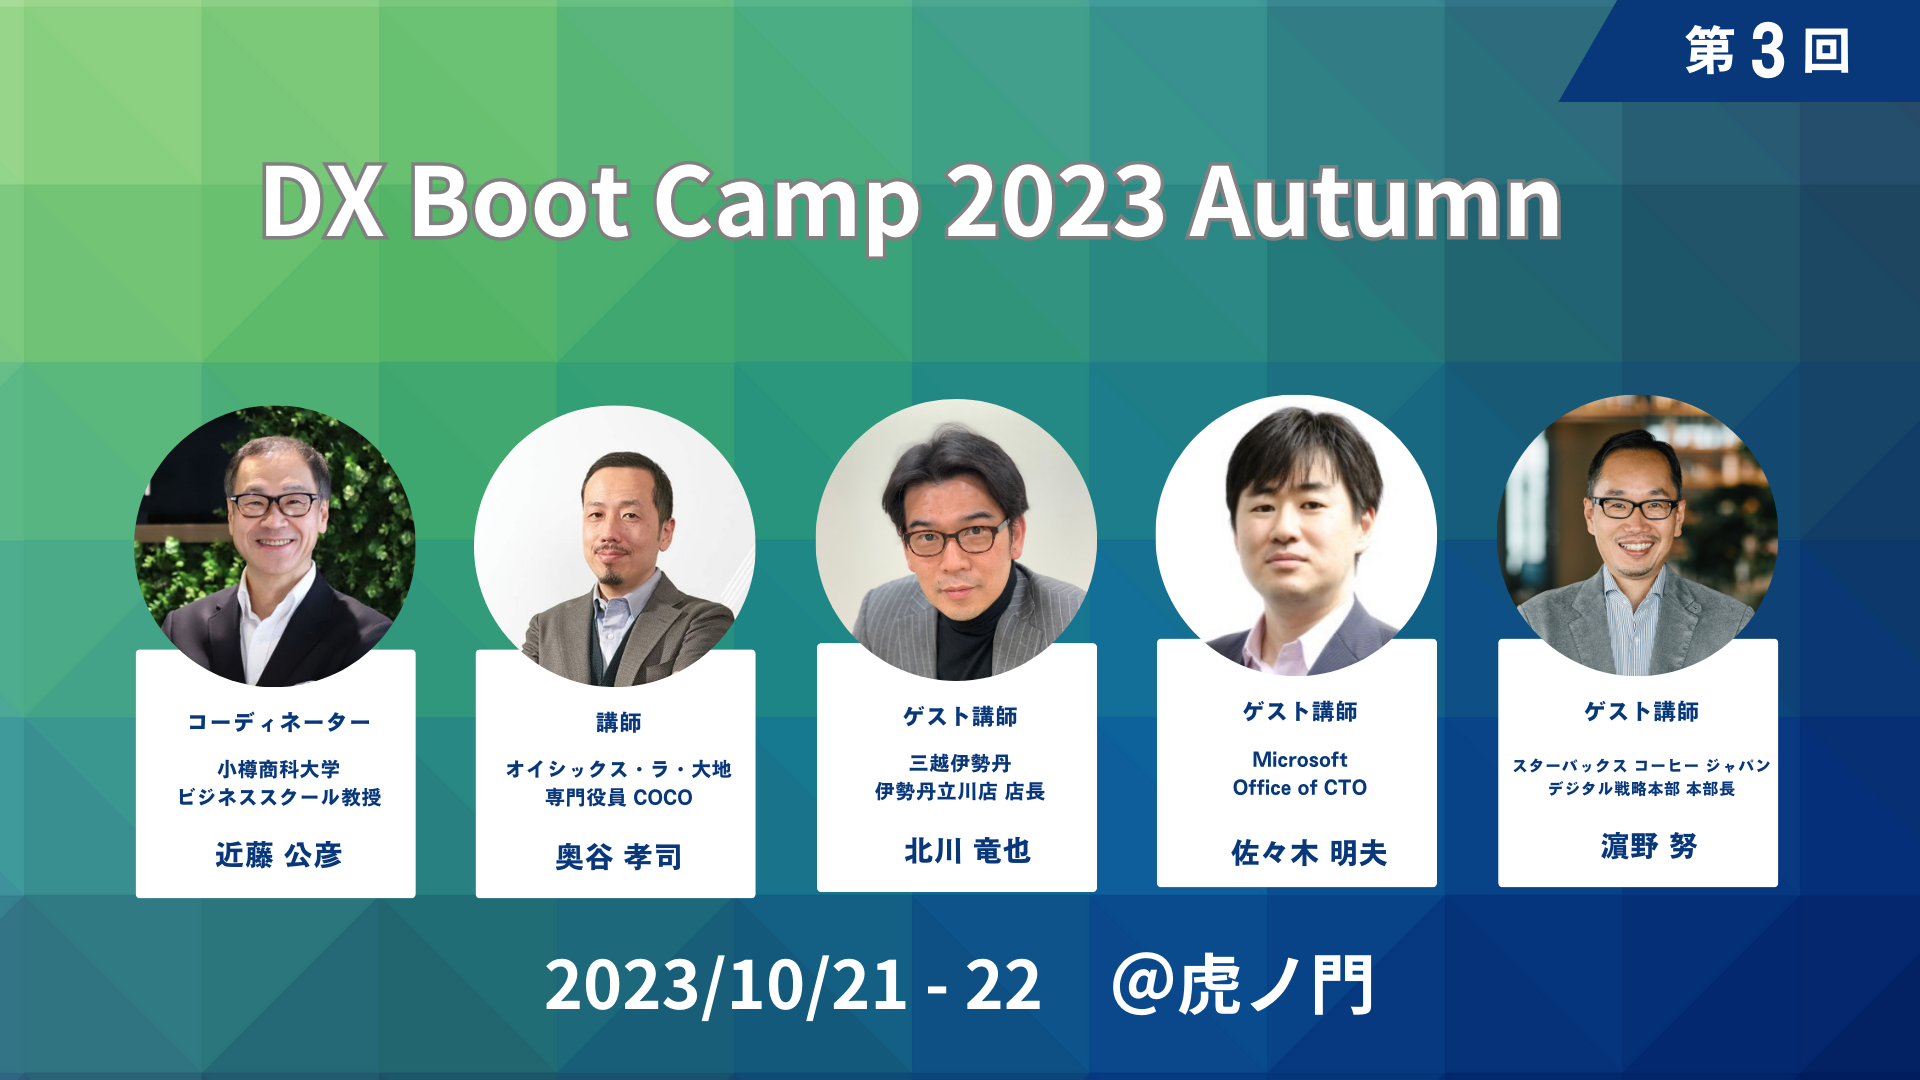 DX Boot Camp 2023 Autumn